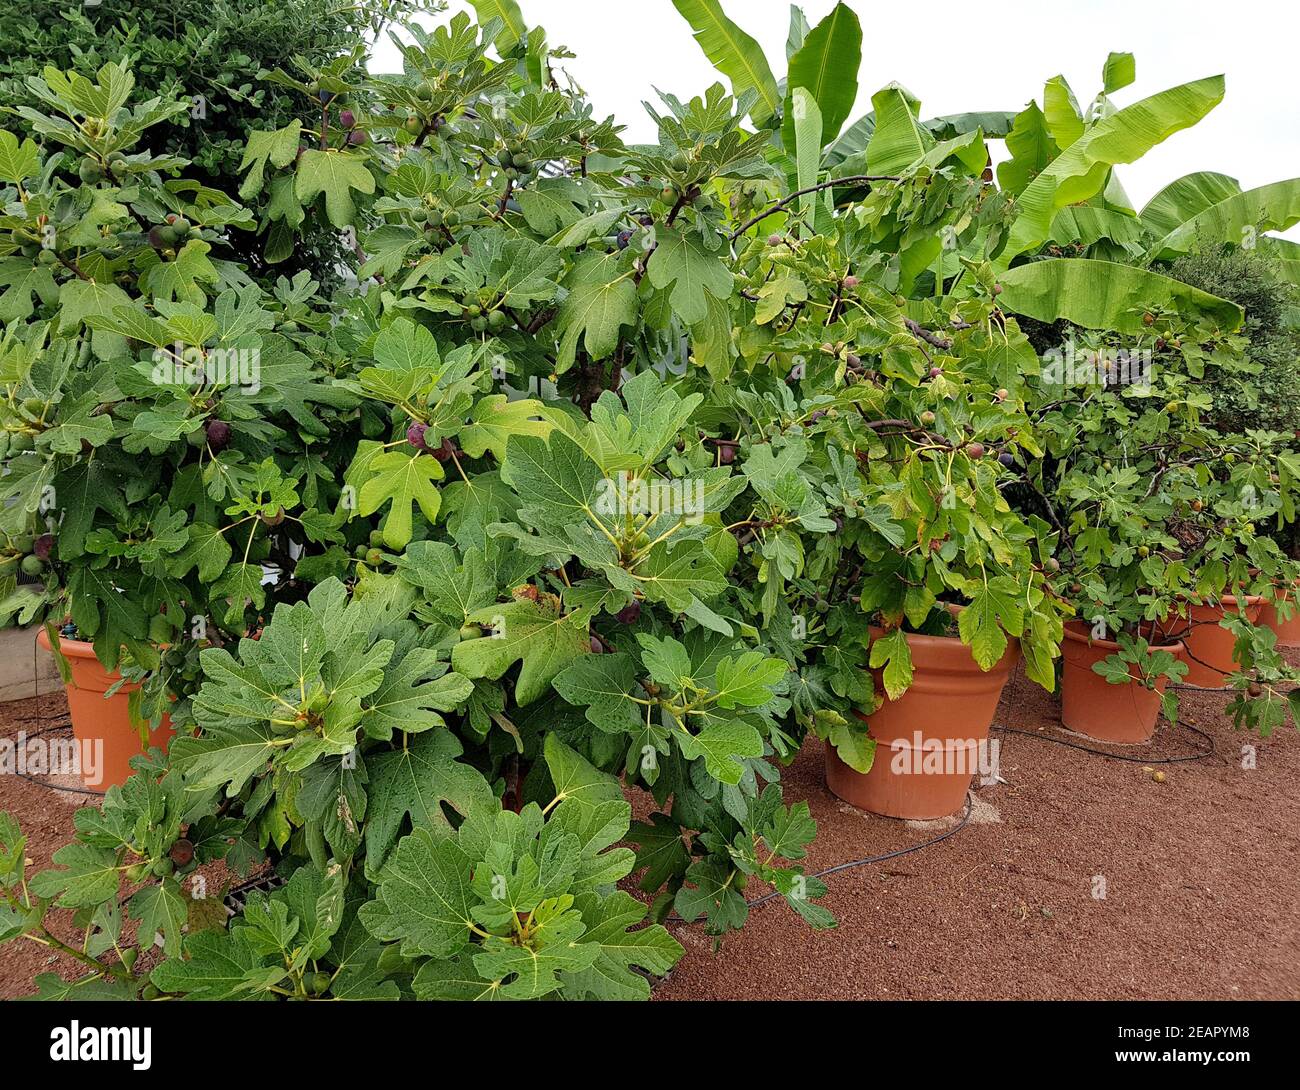 Feigen, Ficus carica, Feigenbaum Stock Photo